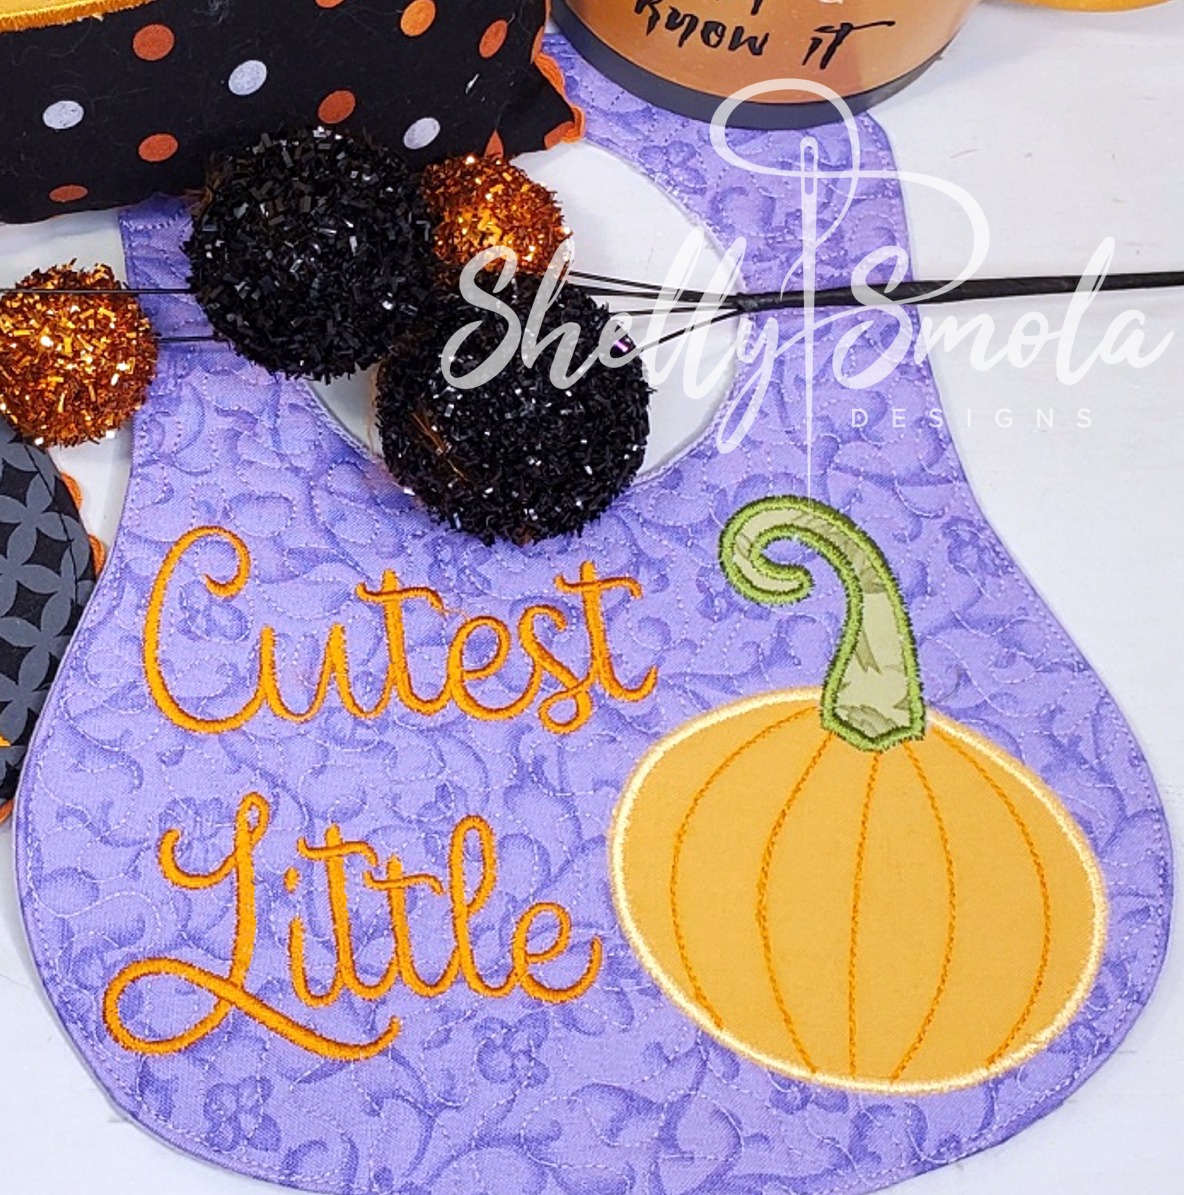 Cutest Little Pumpkin by Shelly Smola